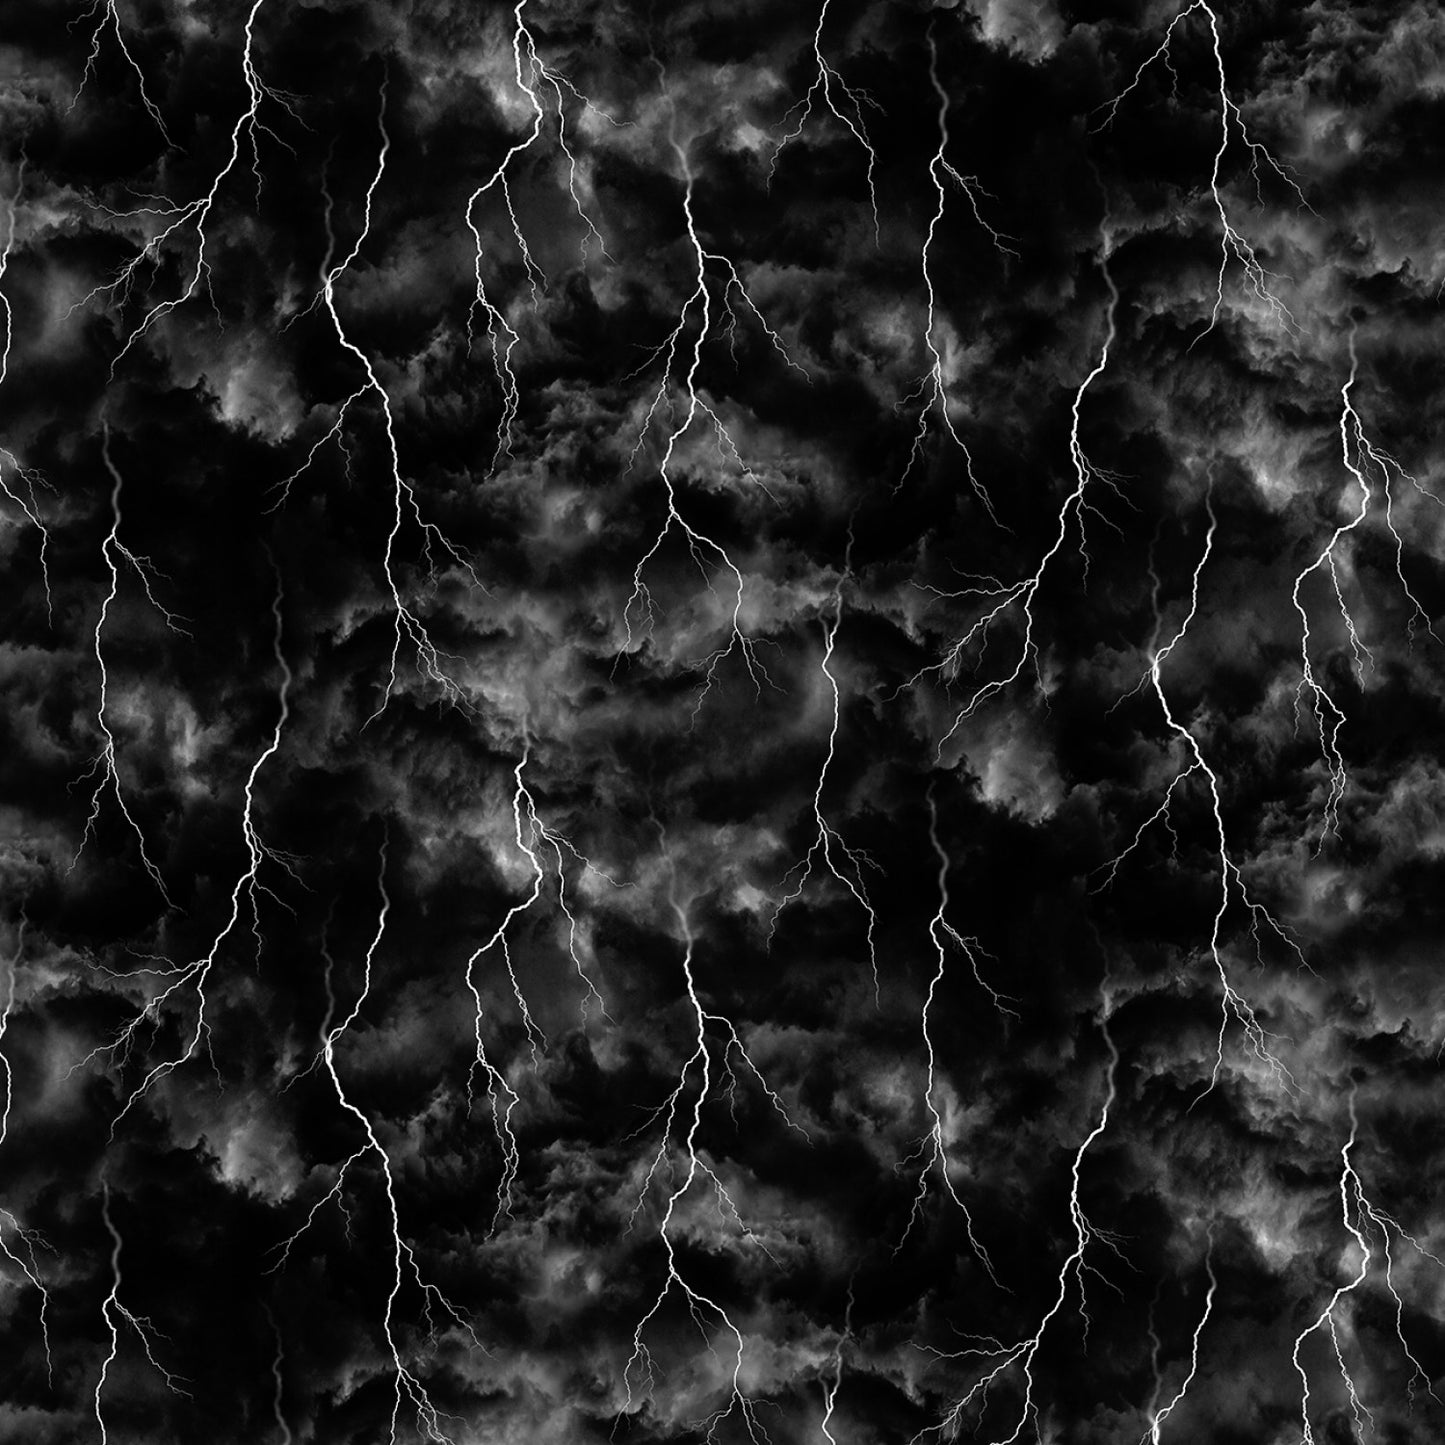 New Arrival: Wicked Night Lightning Storm On Dark Sky    CD2768-NIGHT Cotton Woven Fabric